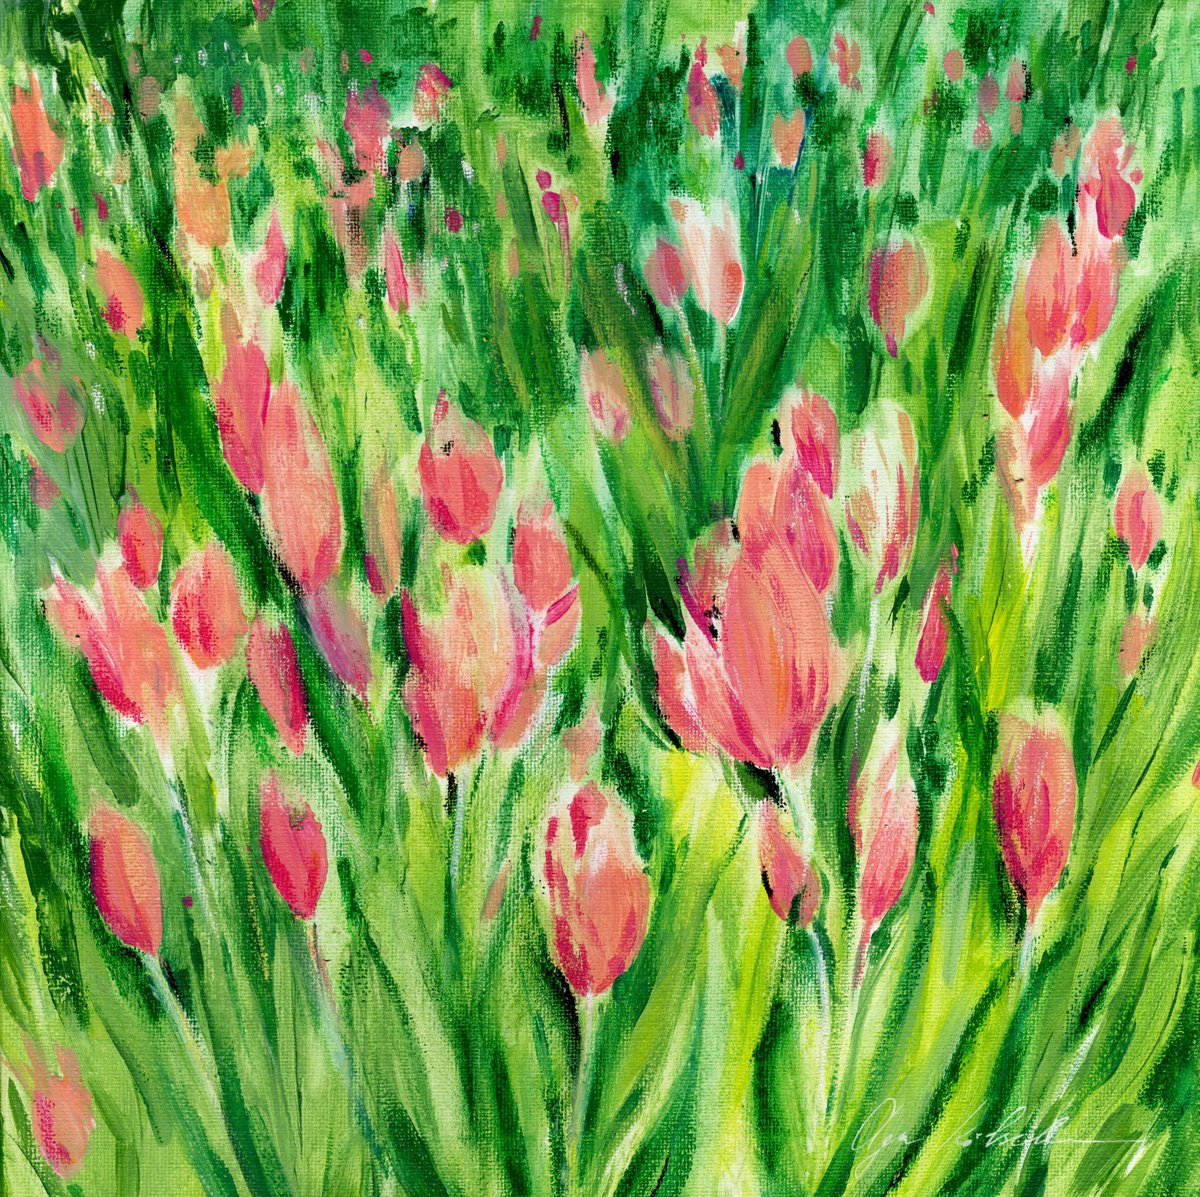 Blooming Tulips Garden by Olga Koelsch